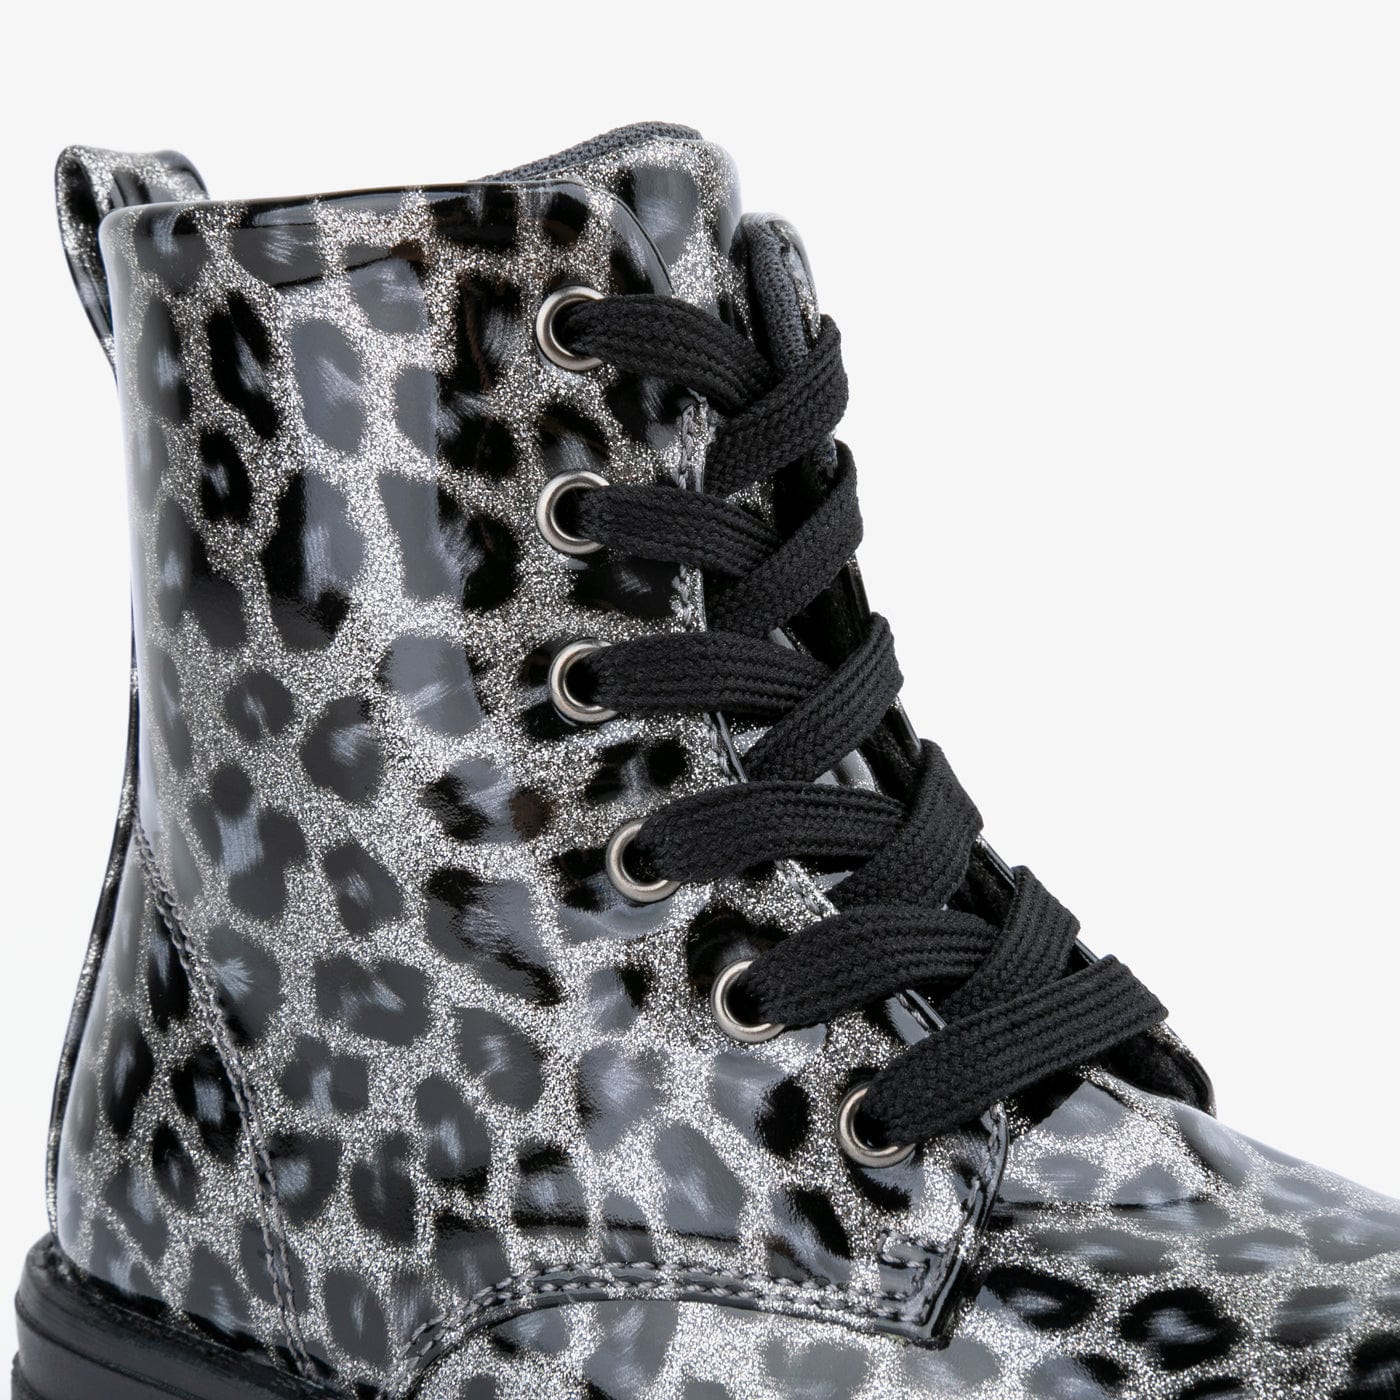 CONGUITOS Shoes Girl's Lead Leopard Boots